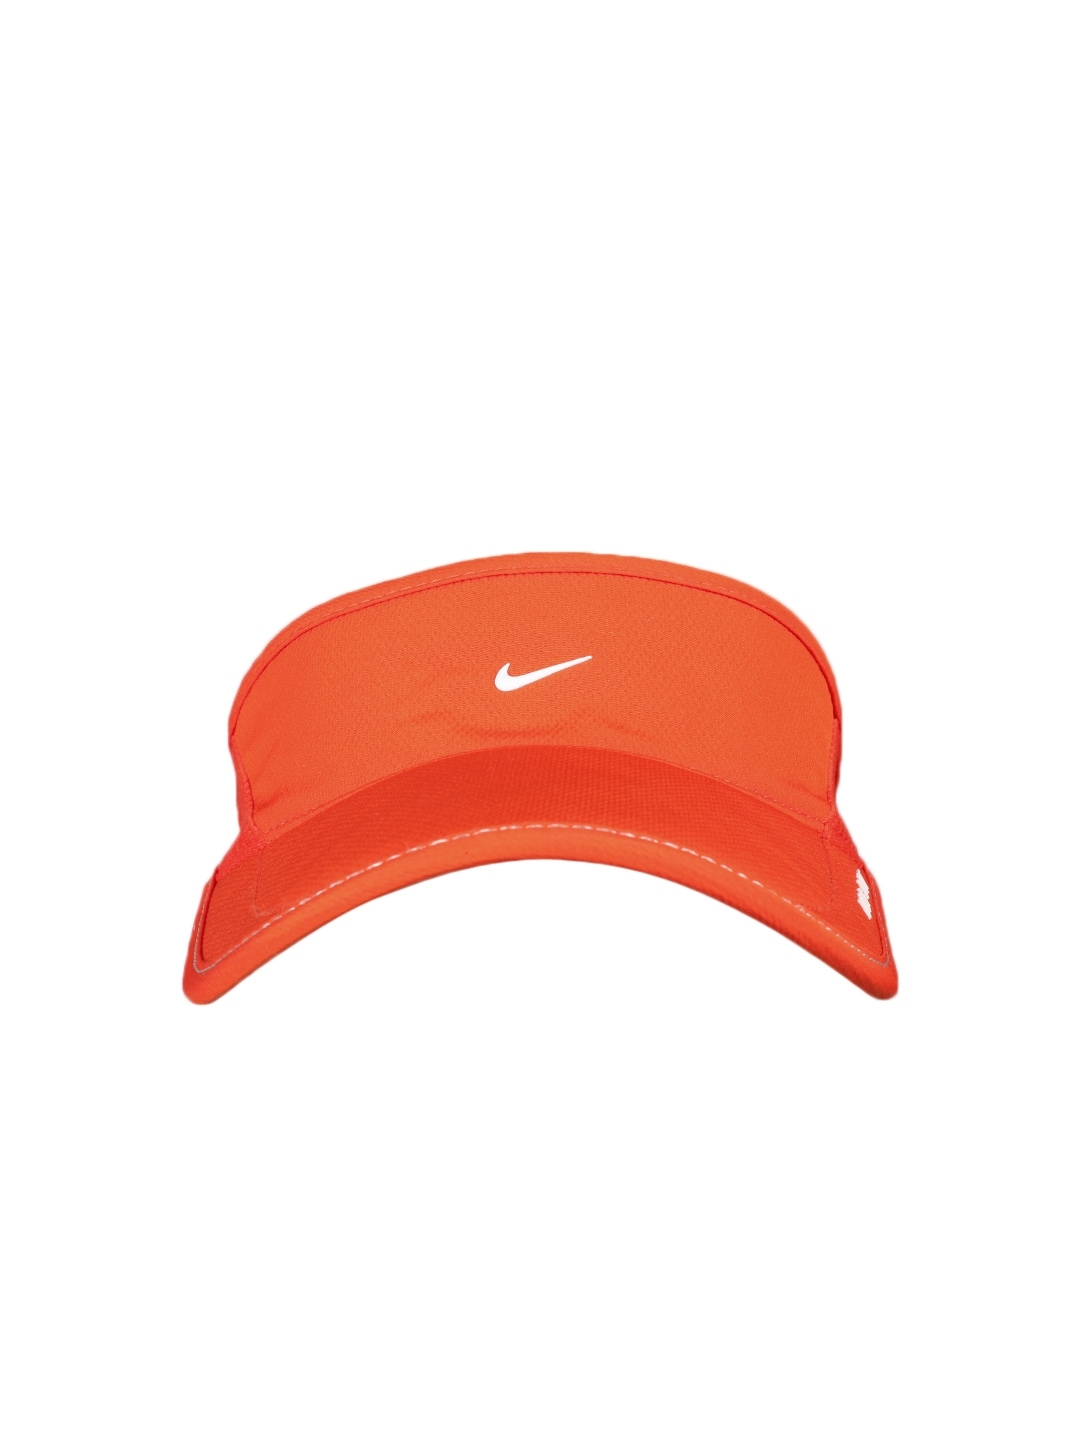 Nike Unisex Orange Daybreak Visor Cap